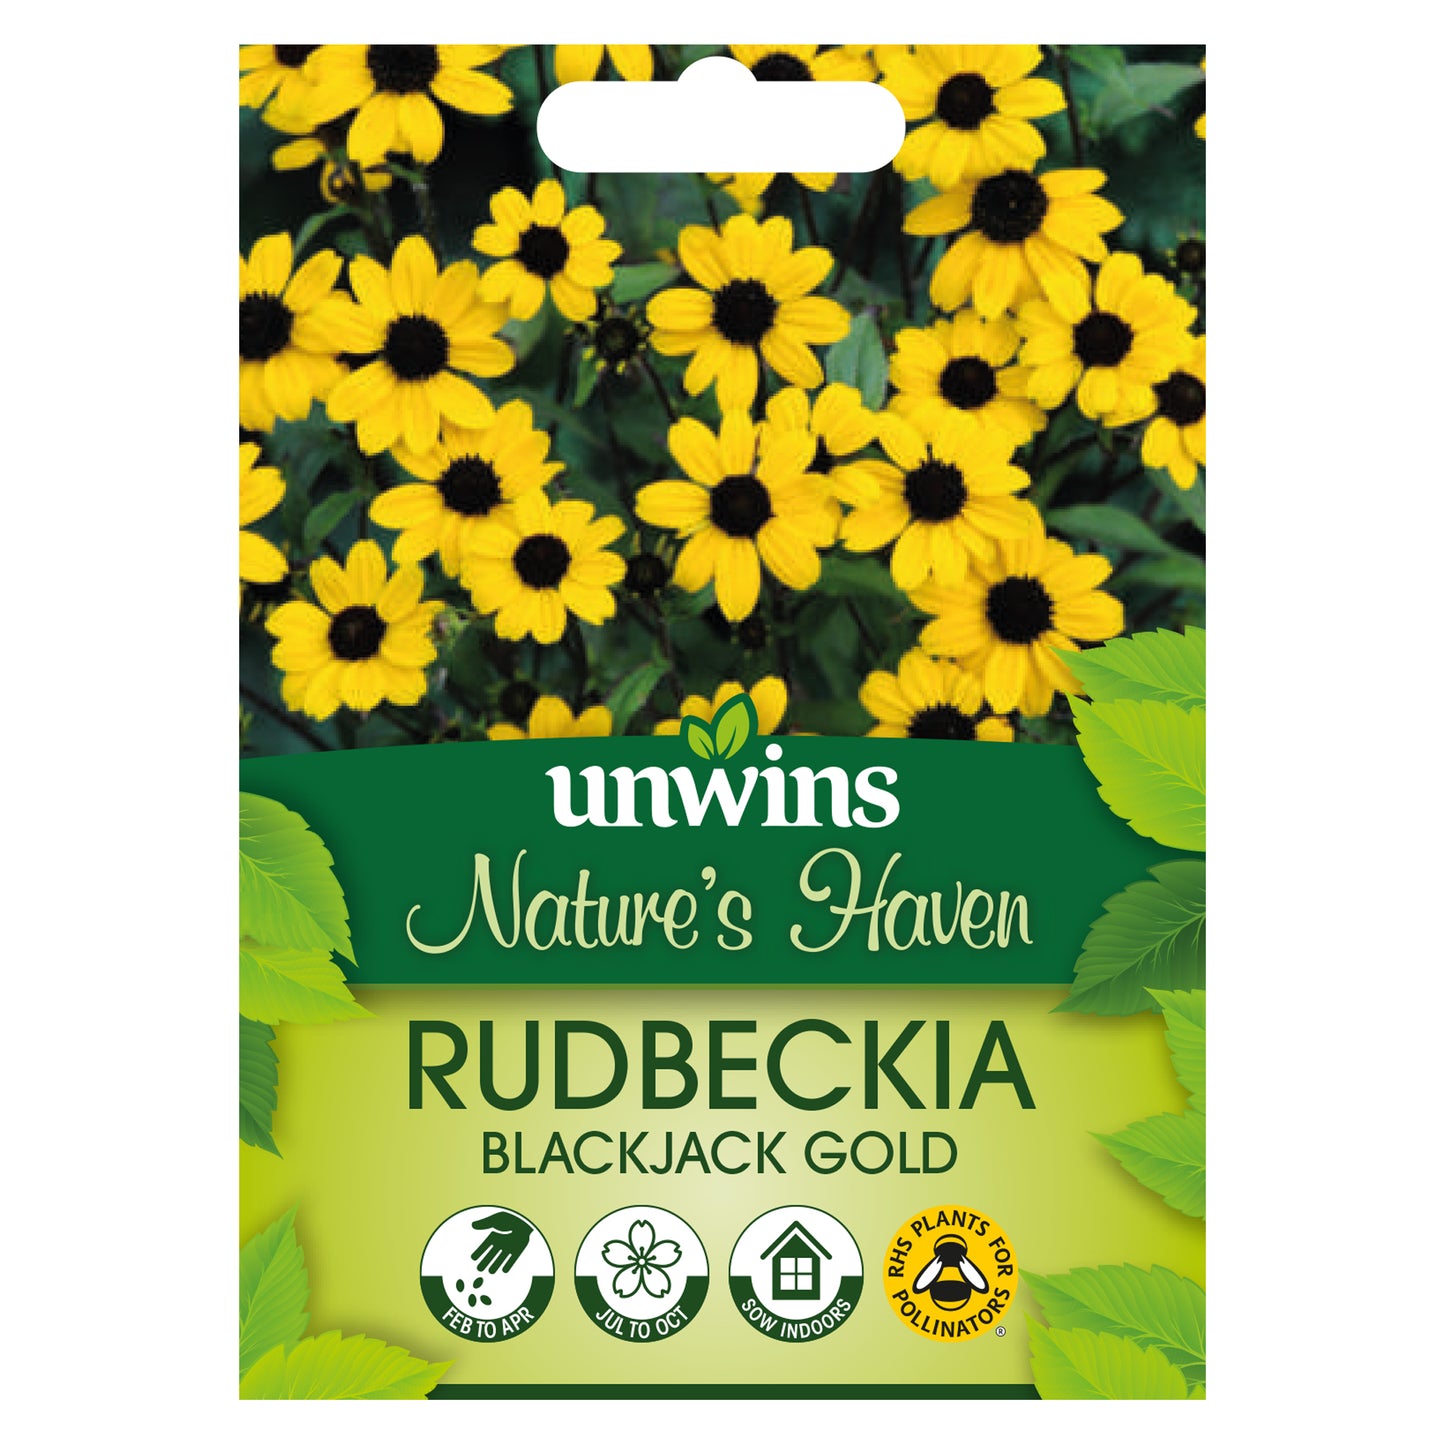 Nature's Haven Rudbeckia Blackjack Gold Seeds Front